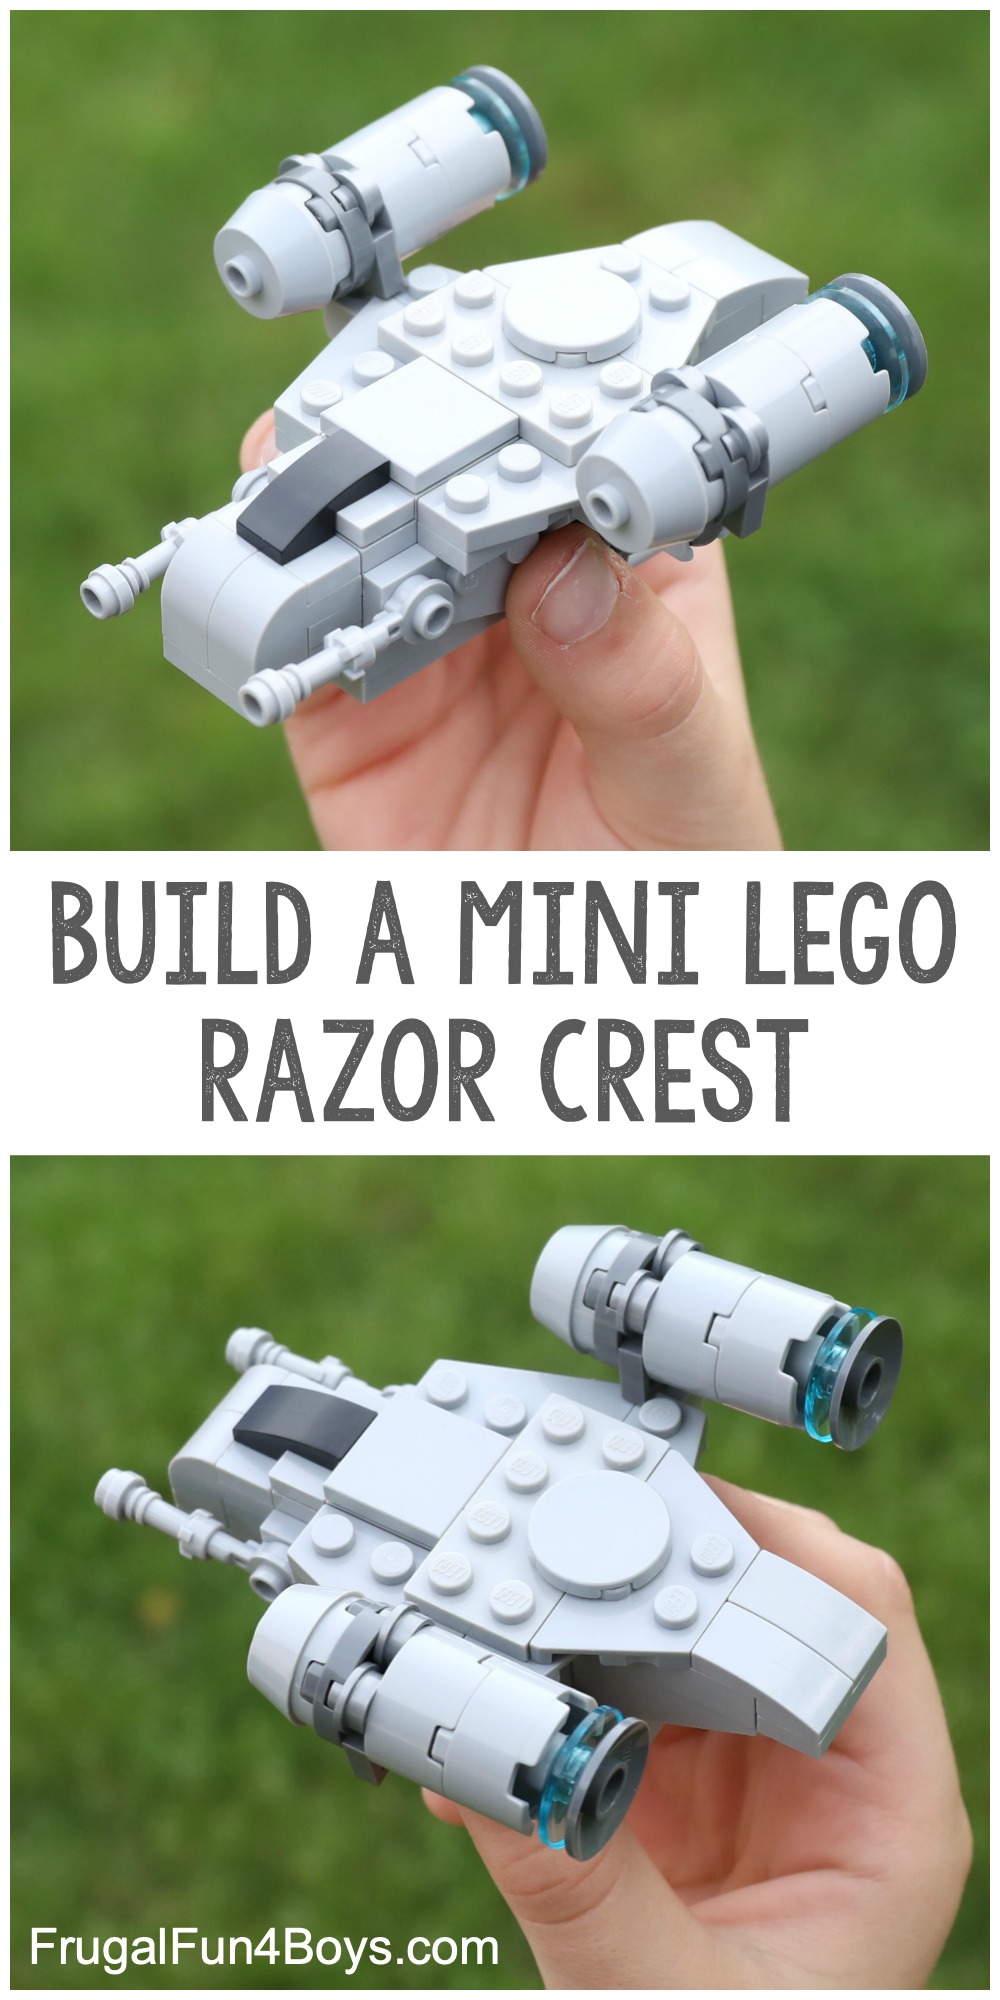 Lego Razor Crest